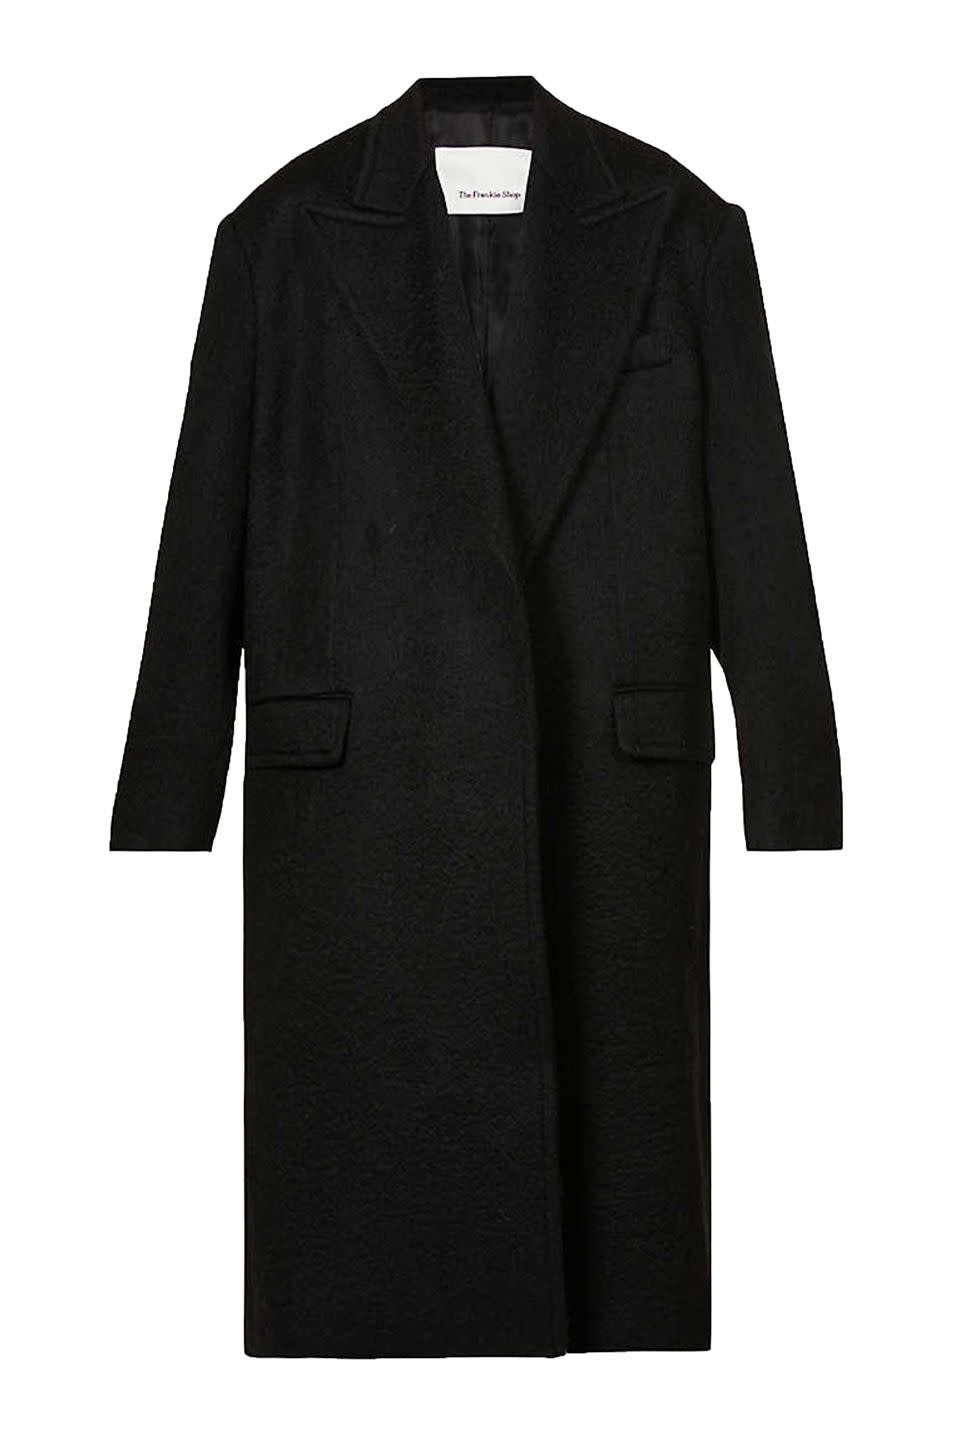 frankie shop black coat